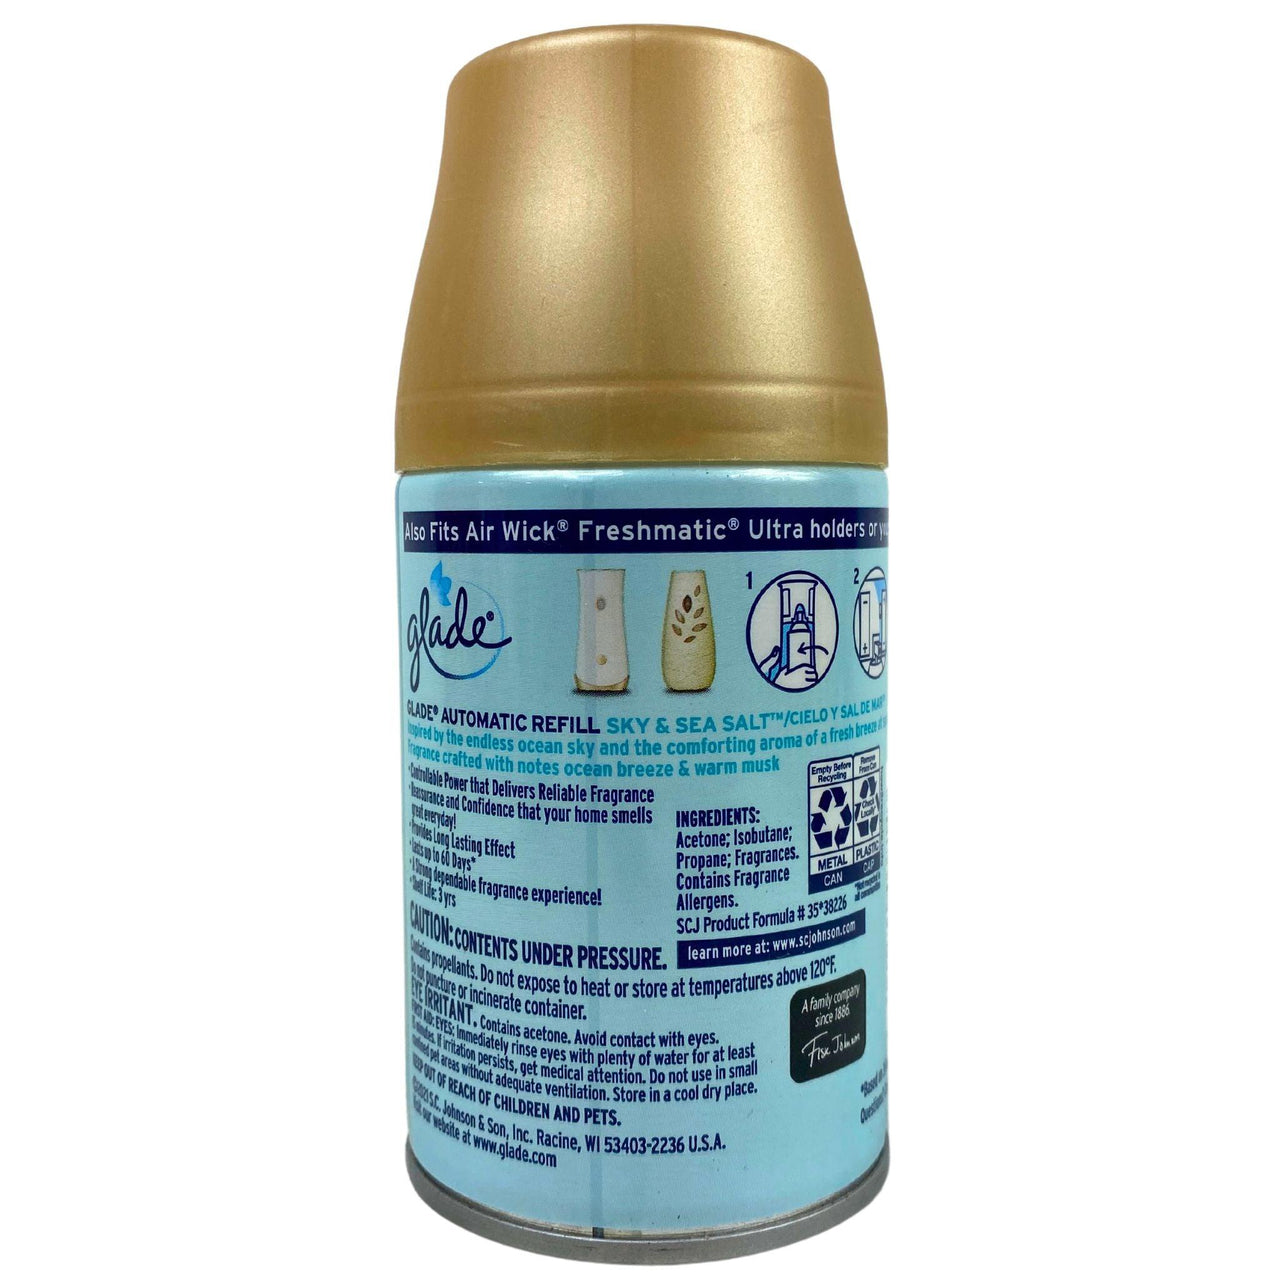 Glade Automatic Spray Refill Sky & Salt 6.2OZ (102 Pcs Lot) - Discount Wholesalers Inc